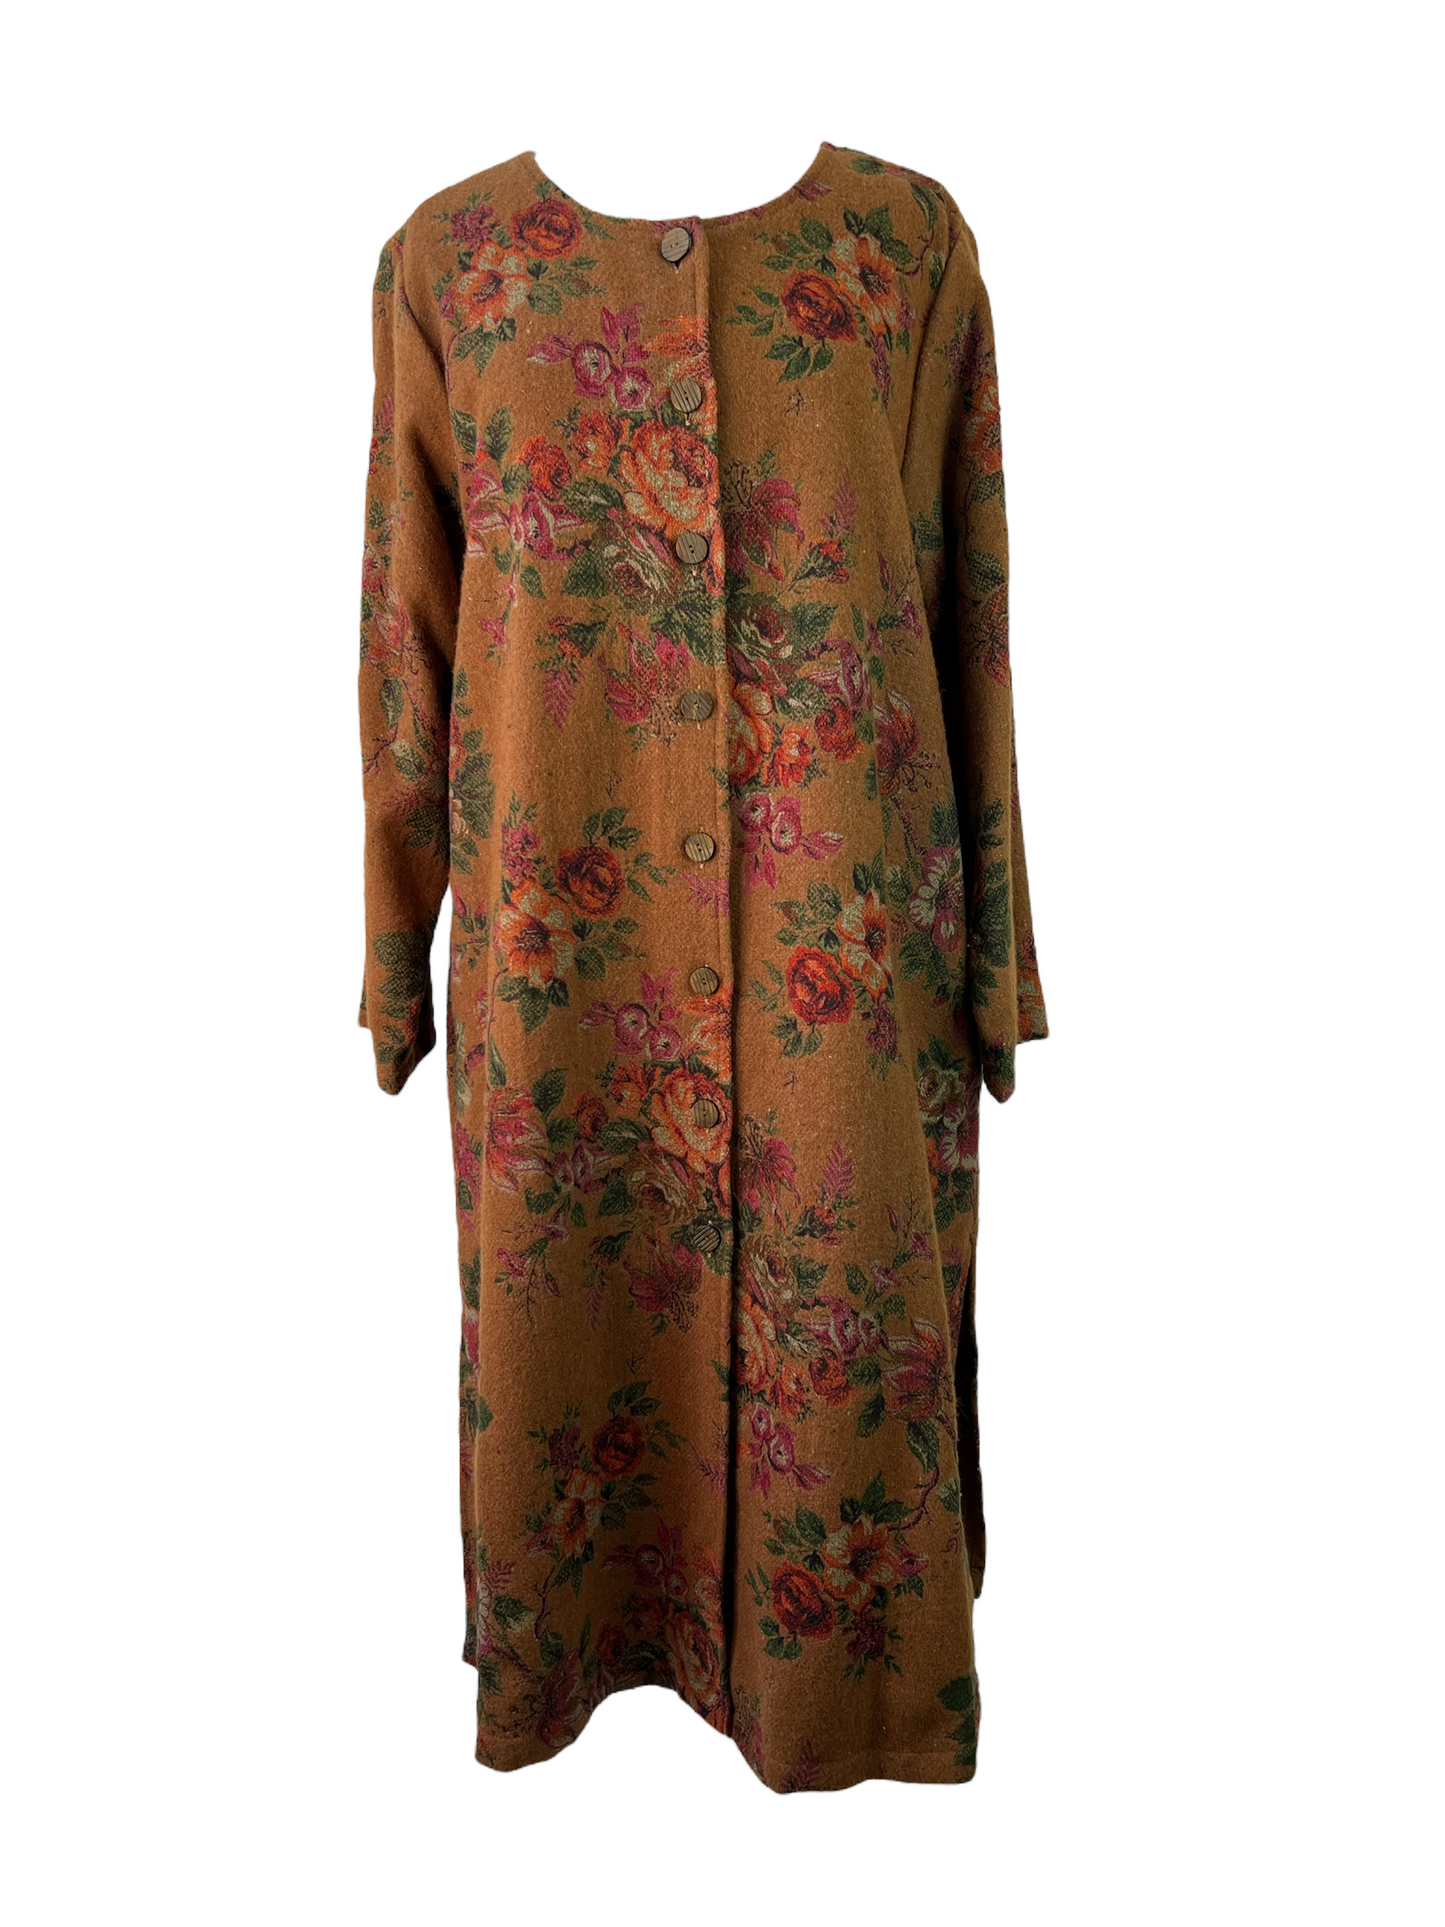 Vintage Warm Tones Floral Coat